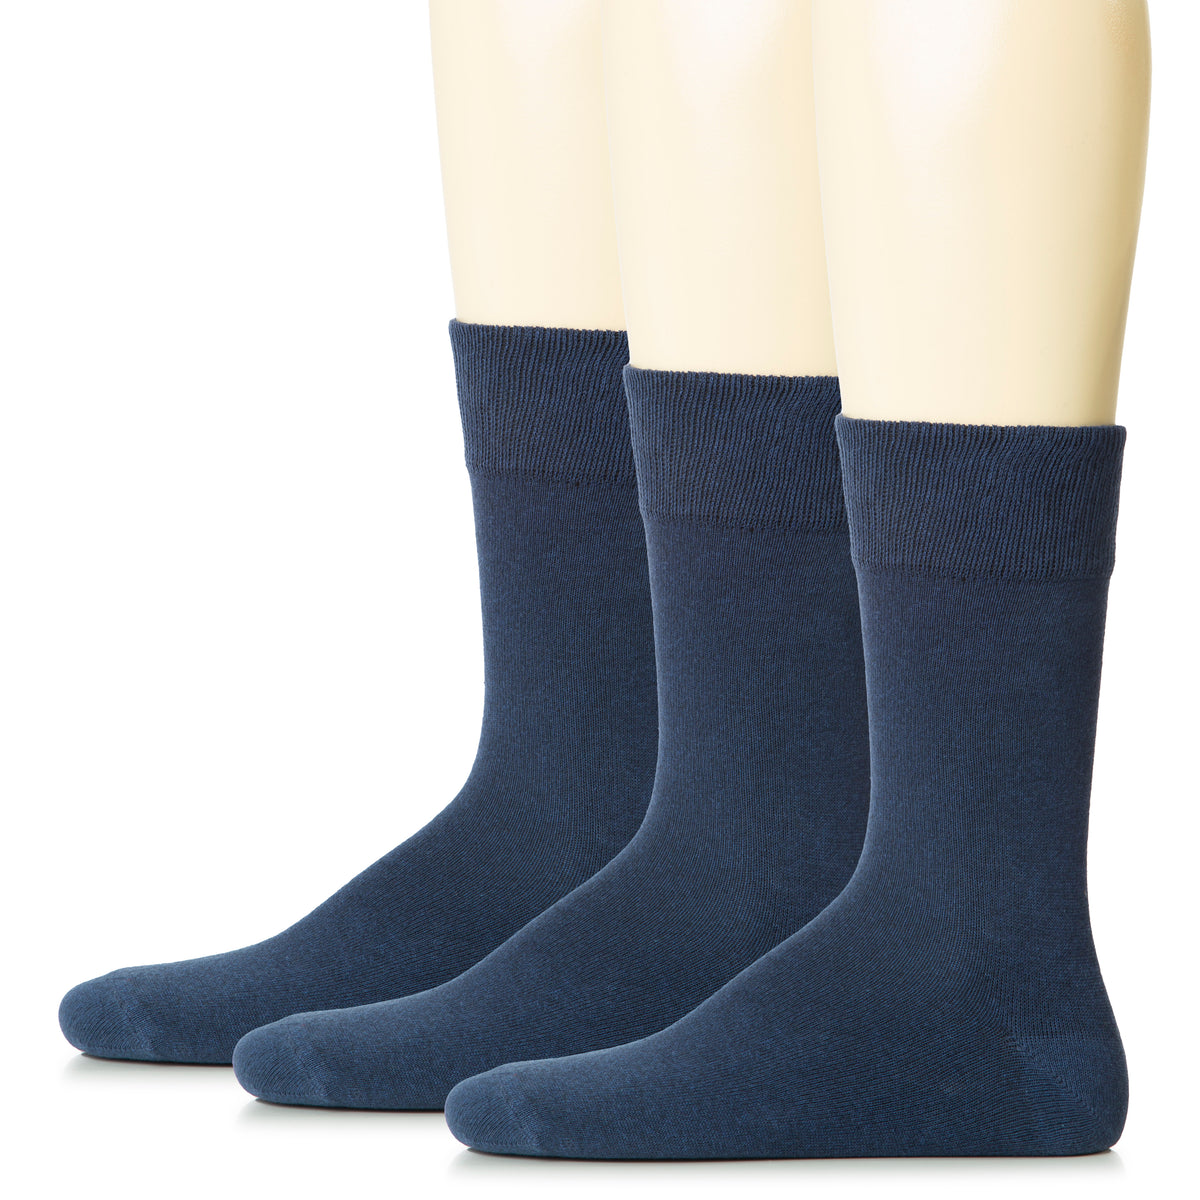 Hugh Ugoli Men Cotton Dress Socks XL / L / M / S Sizes, 3 Pairs | Shoe Size: 13-15 | Navy Blue